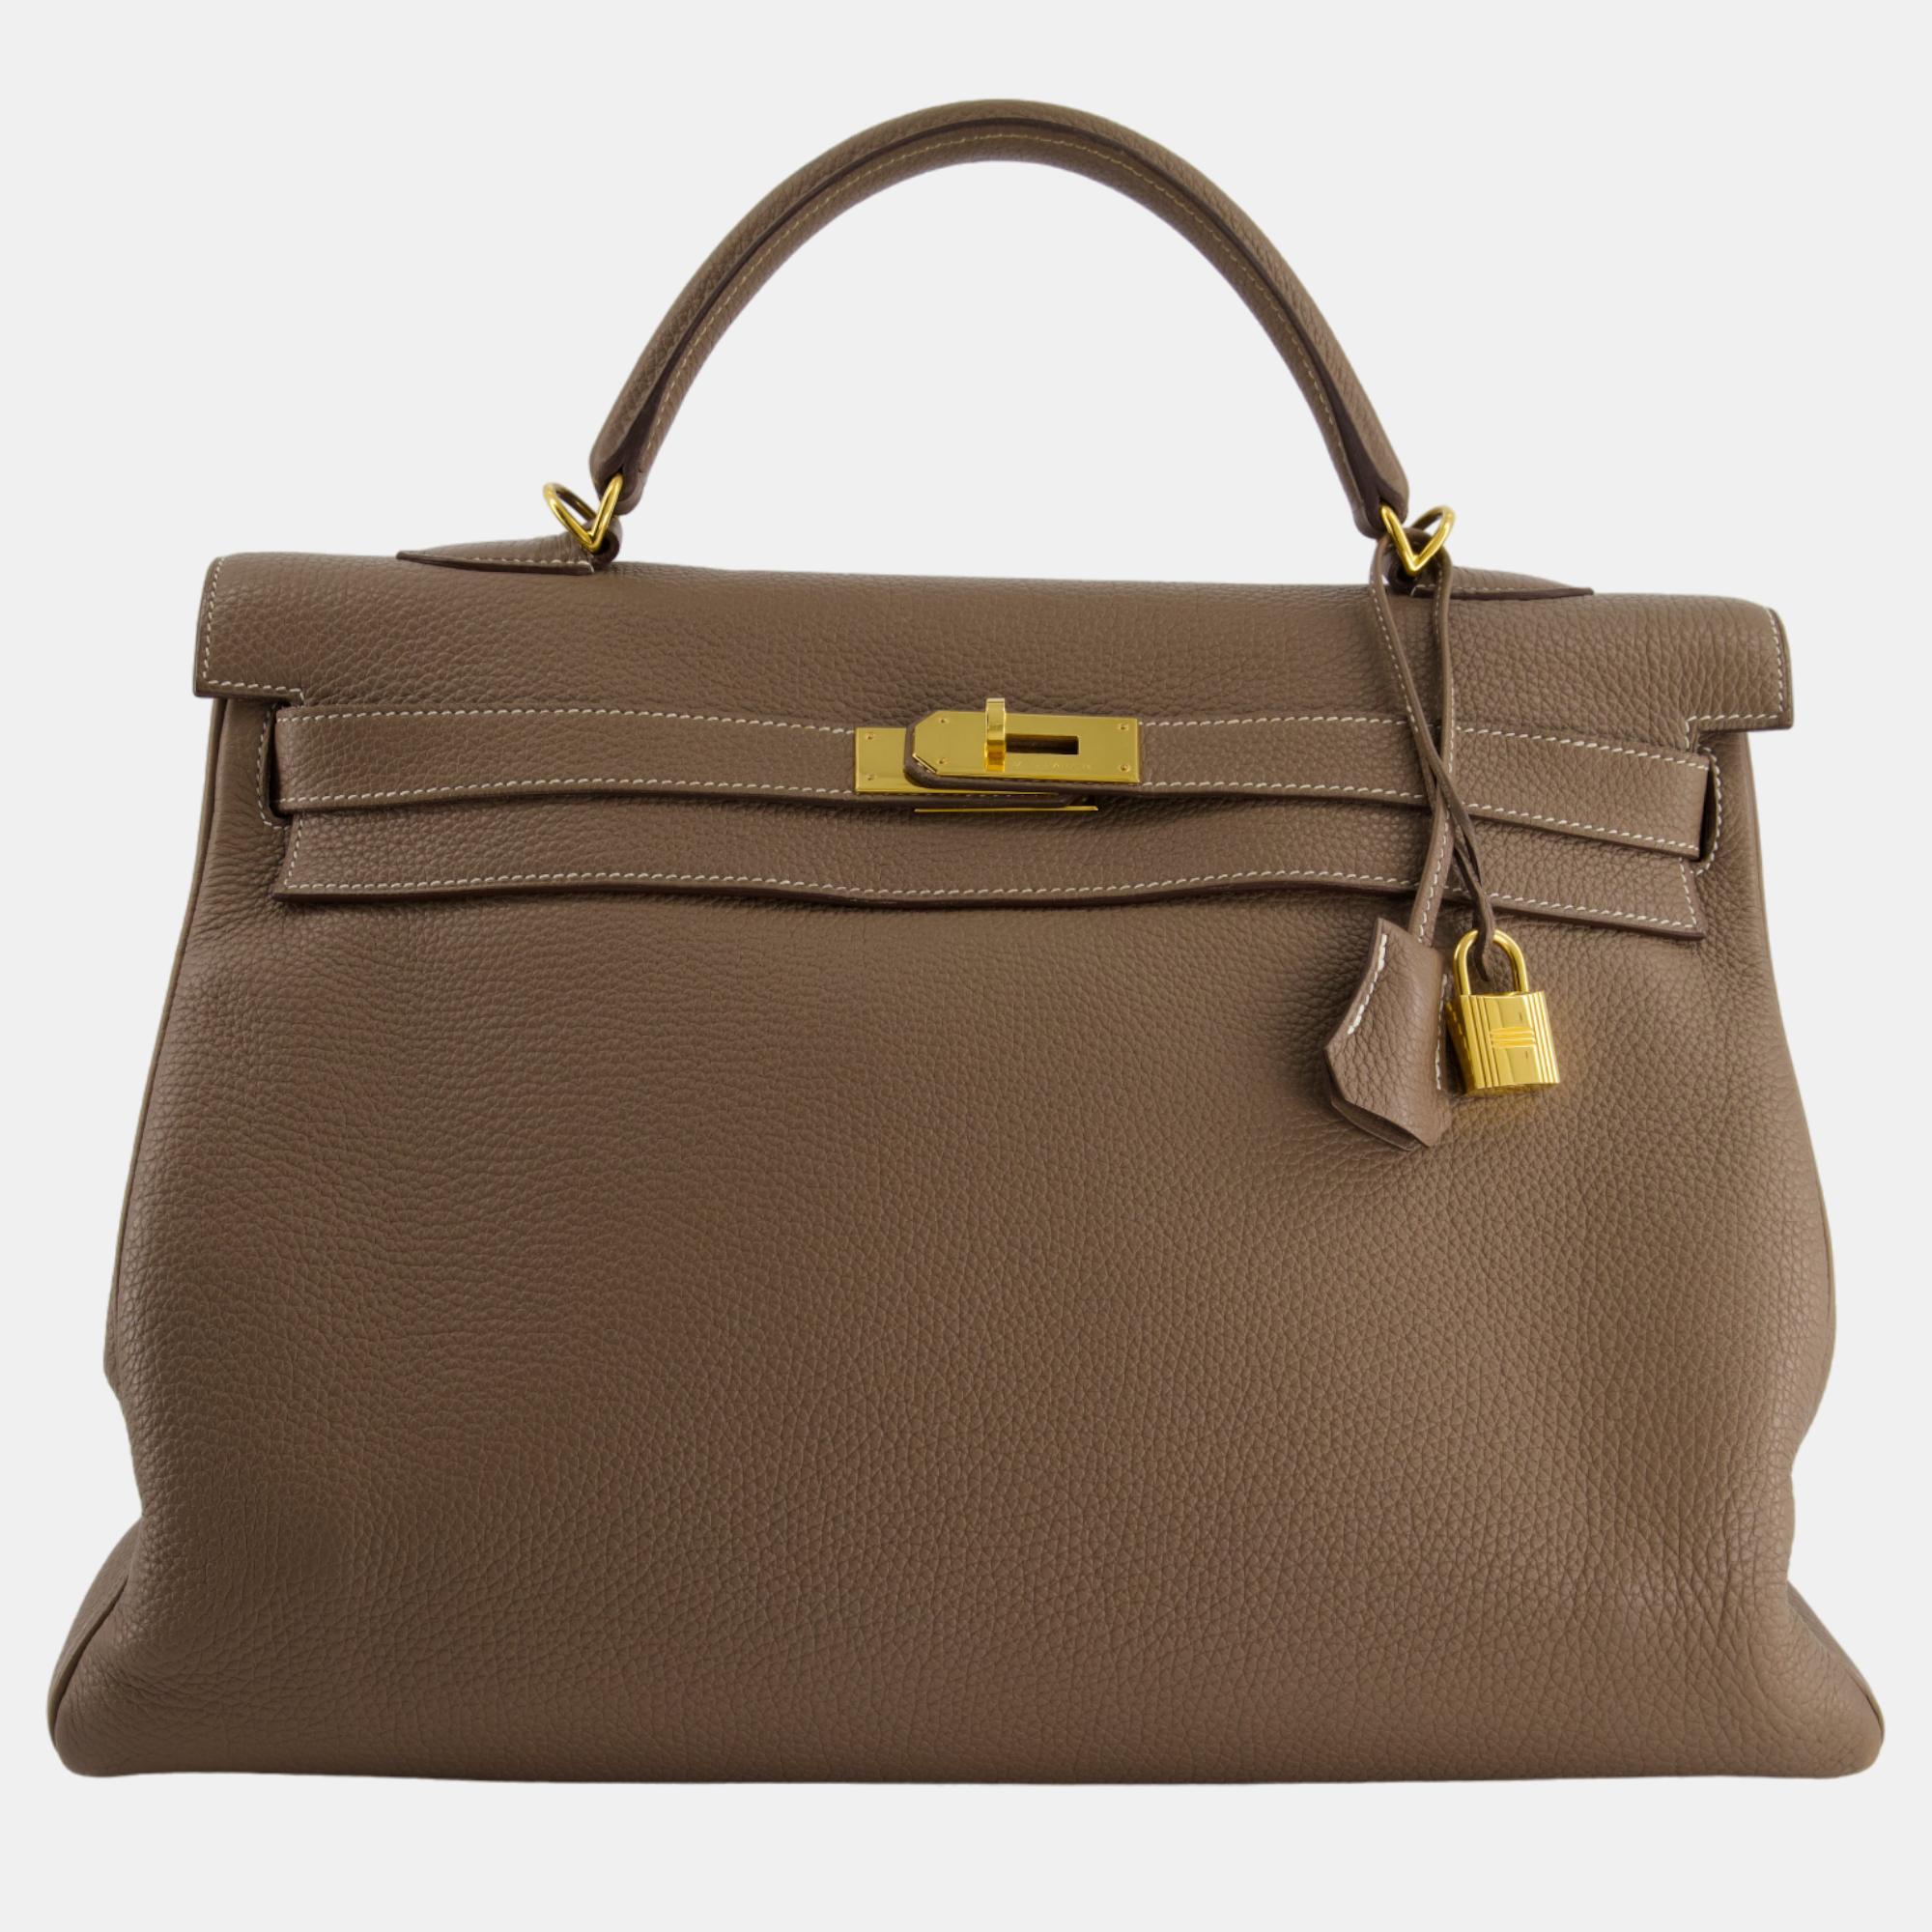 Hermes Kelly 40cm Bag Etoupe Togo Leather With Gold Hardware